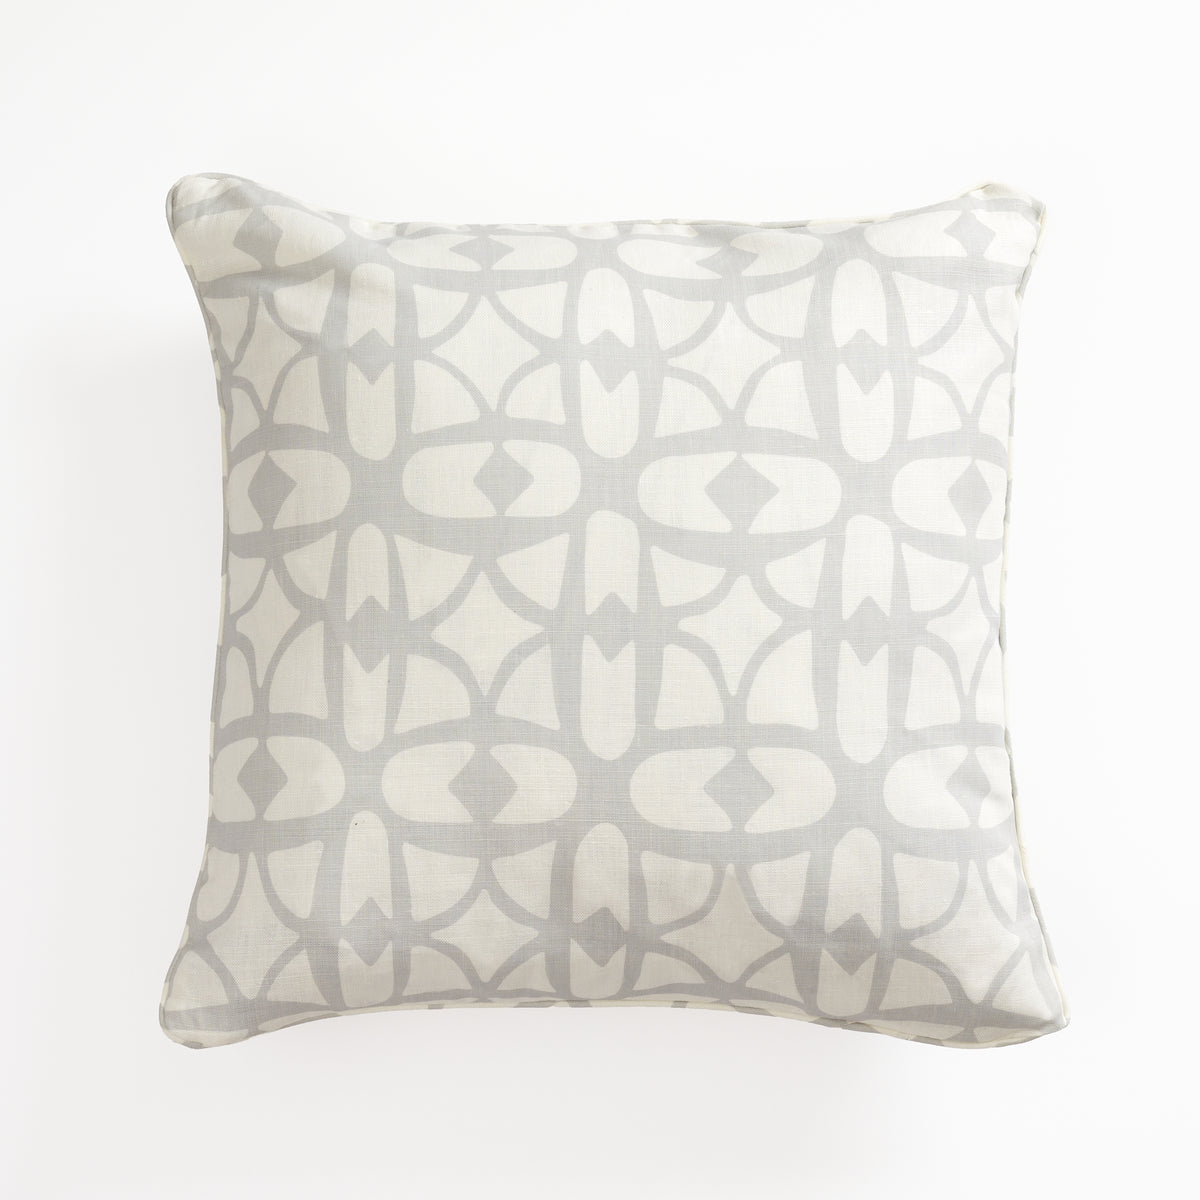 A Midi - Moyen Belgian Linen Pillow